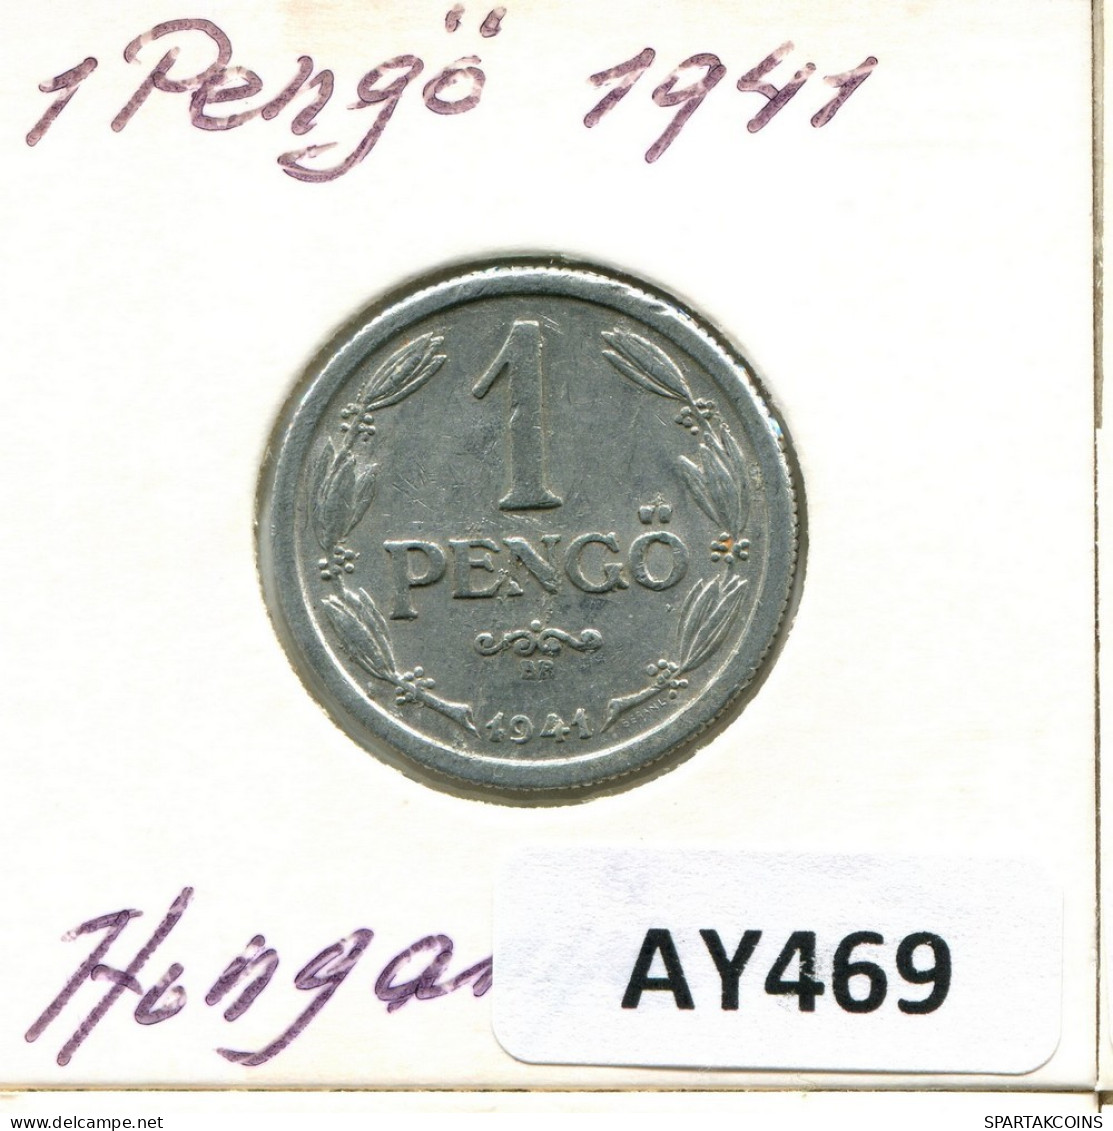 1 PENGO 1941 HUNGARY Coin #AY469.U.A - Hungary